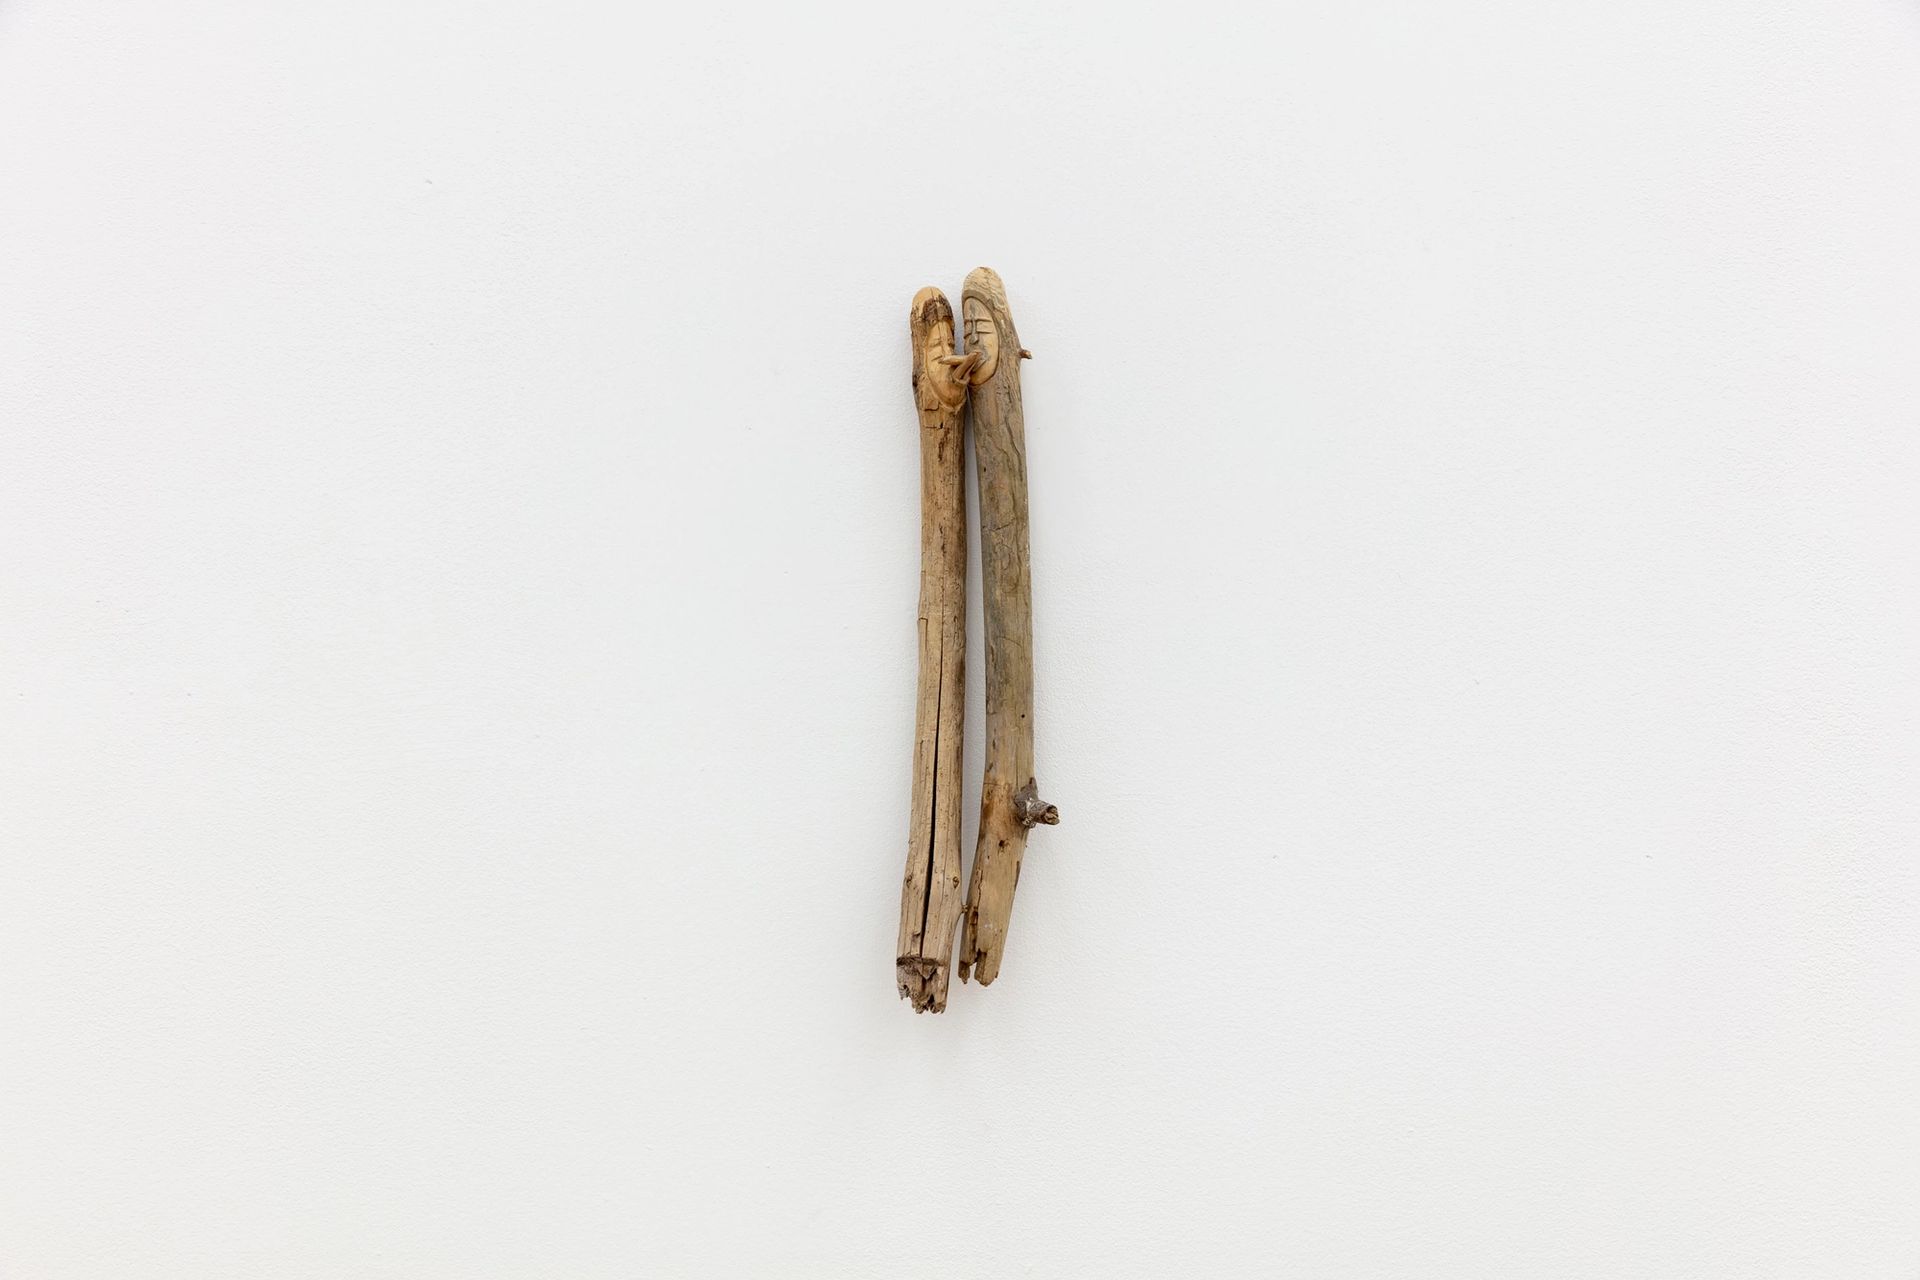 Birke Gorm, “IOU”, 2021, wood, 41 × 8 × 7 cm, Courtesy the artist and Croy Nielsen, Vienna, photo: Sebastian Kissel